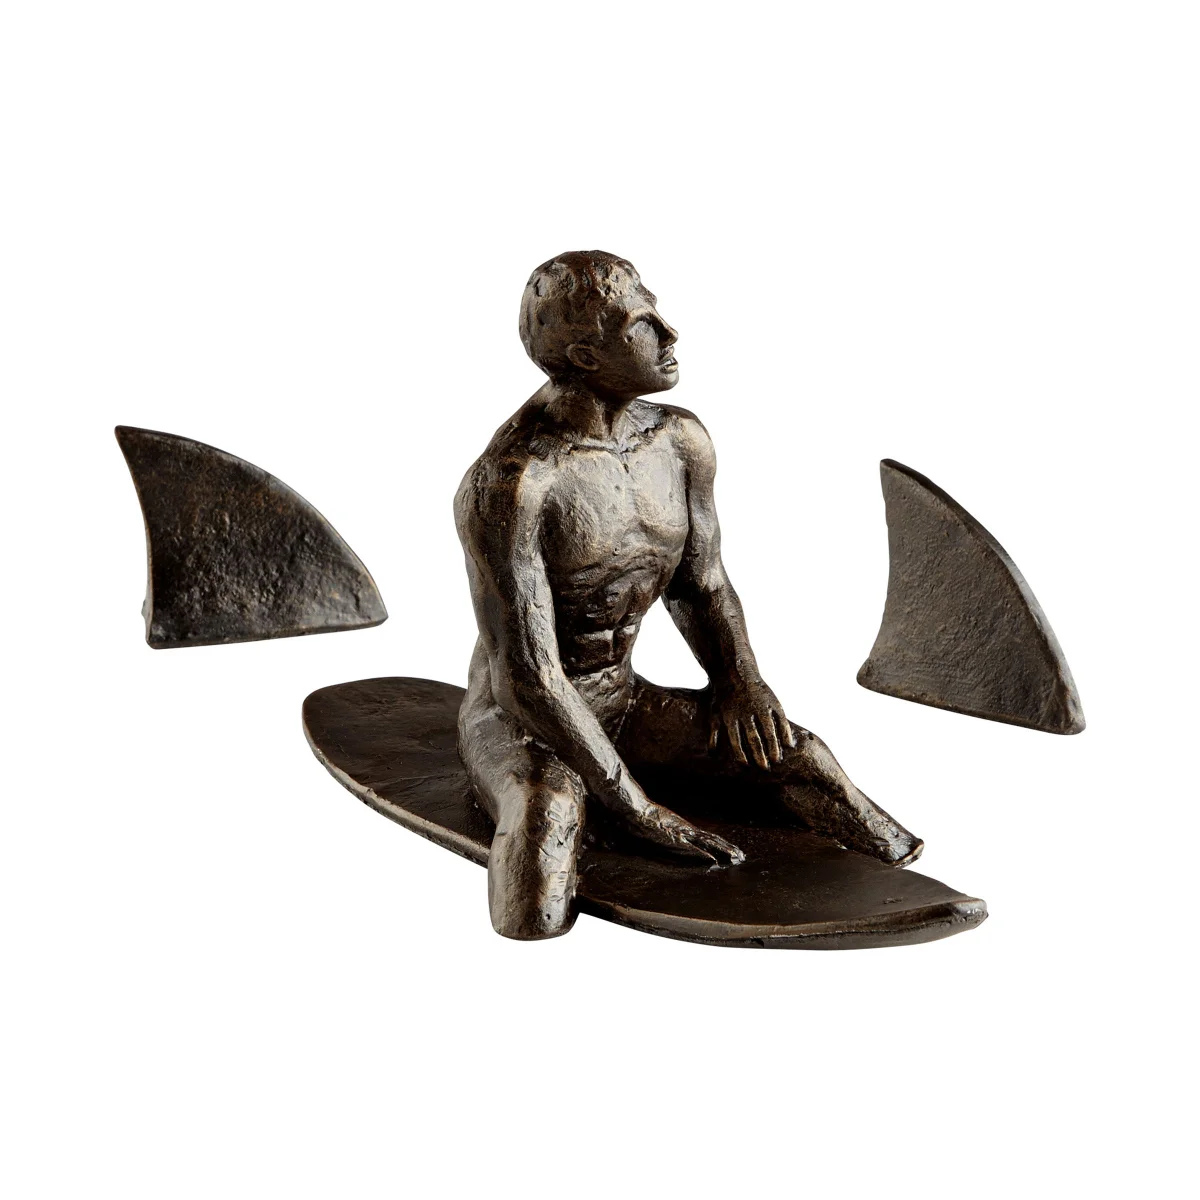 Cowabunga Sculpture | Old World